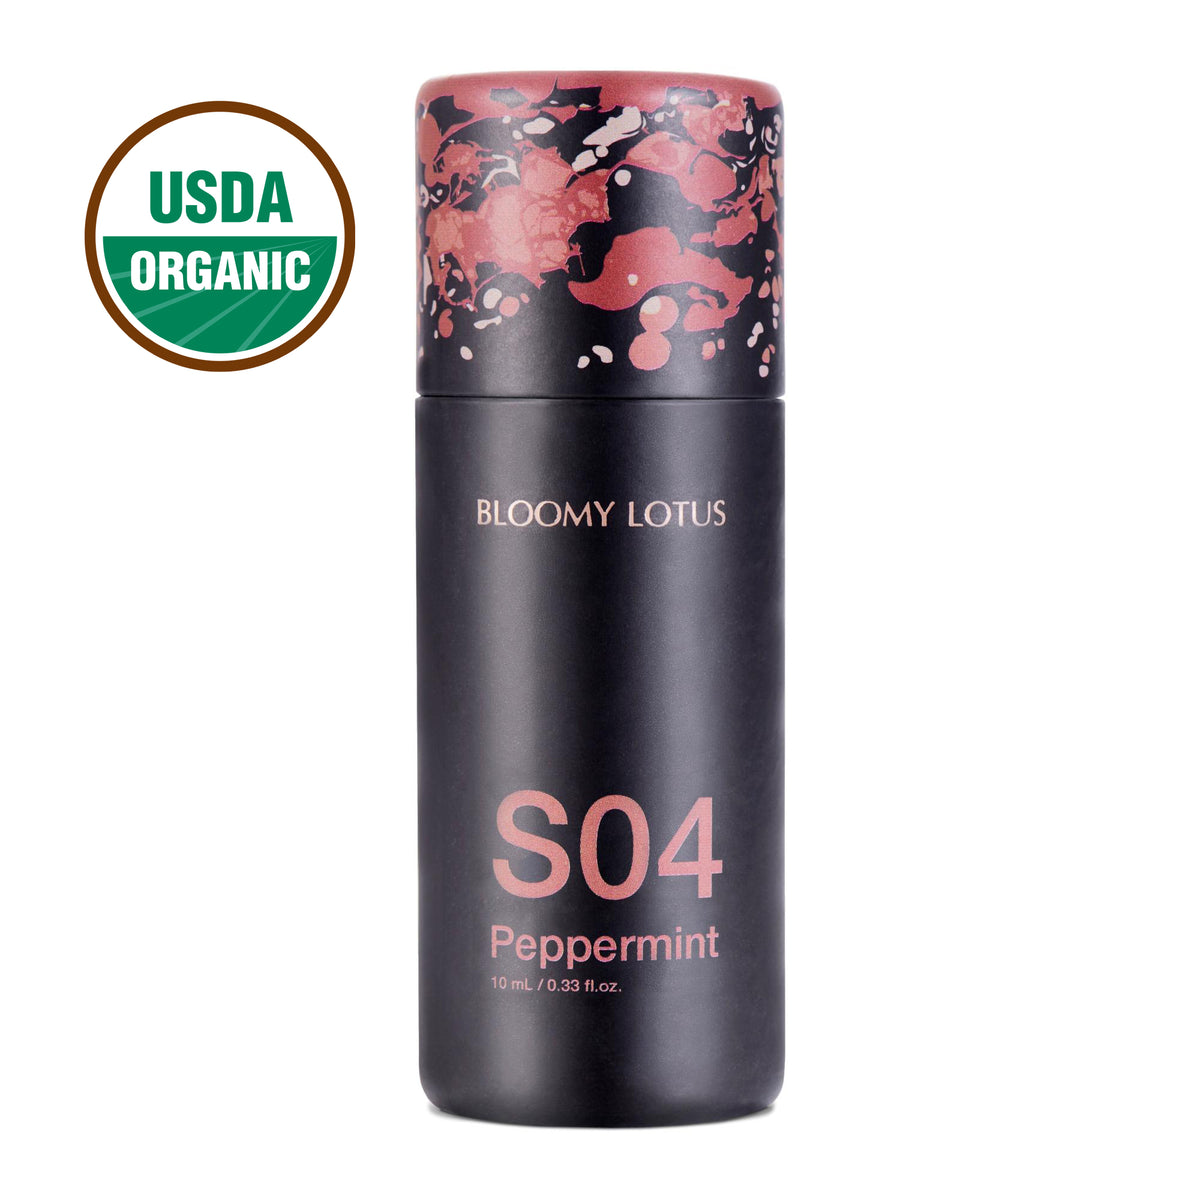 Bloomy Lotus S04 Peppermint Essential Oil, 10 ml